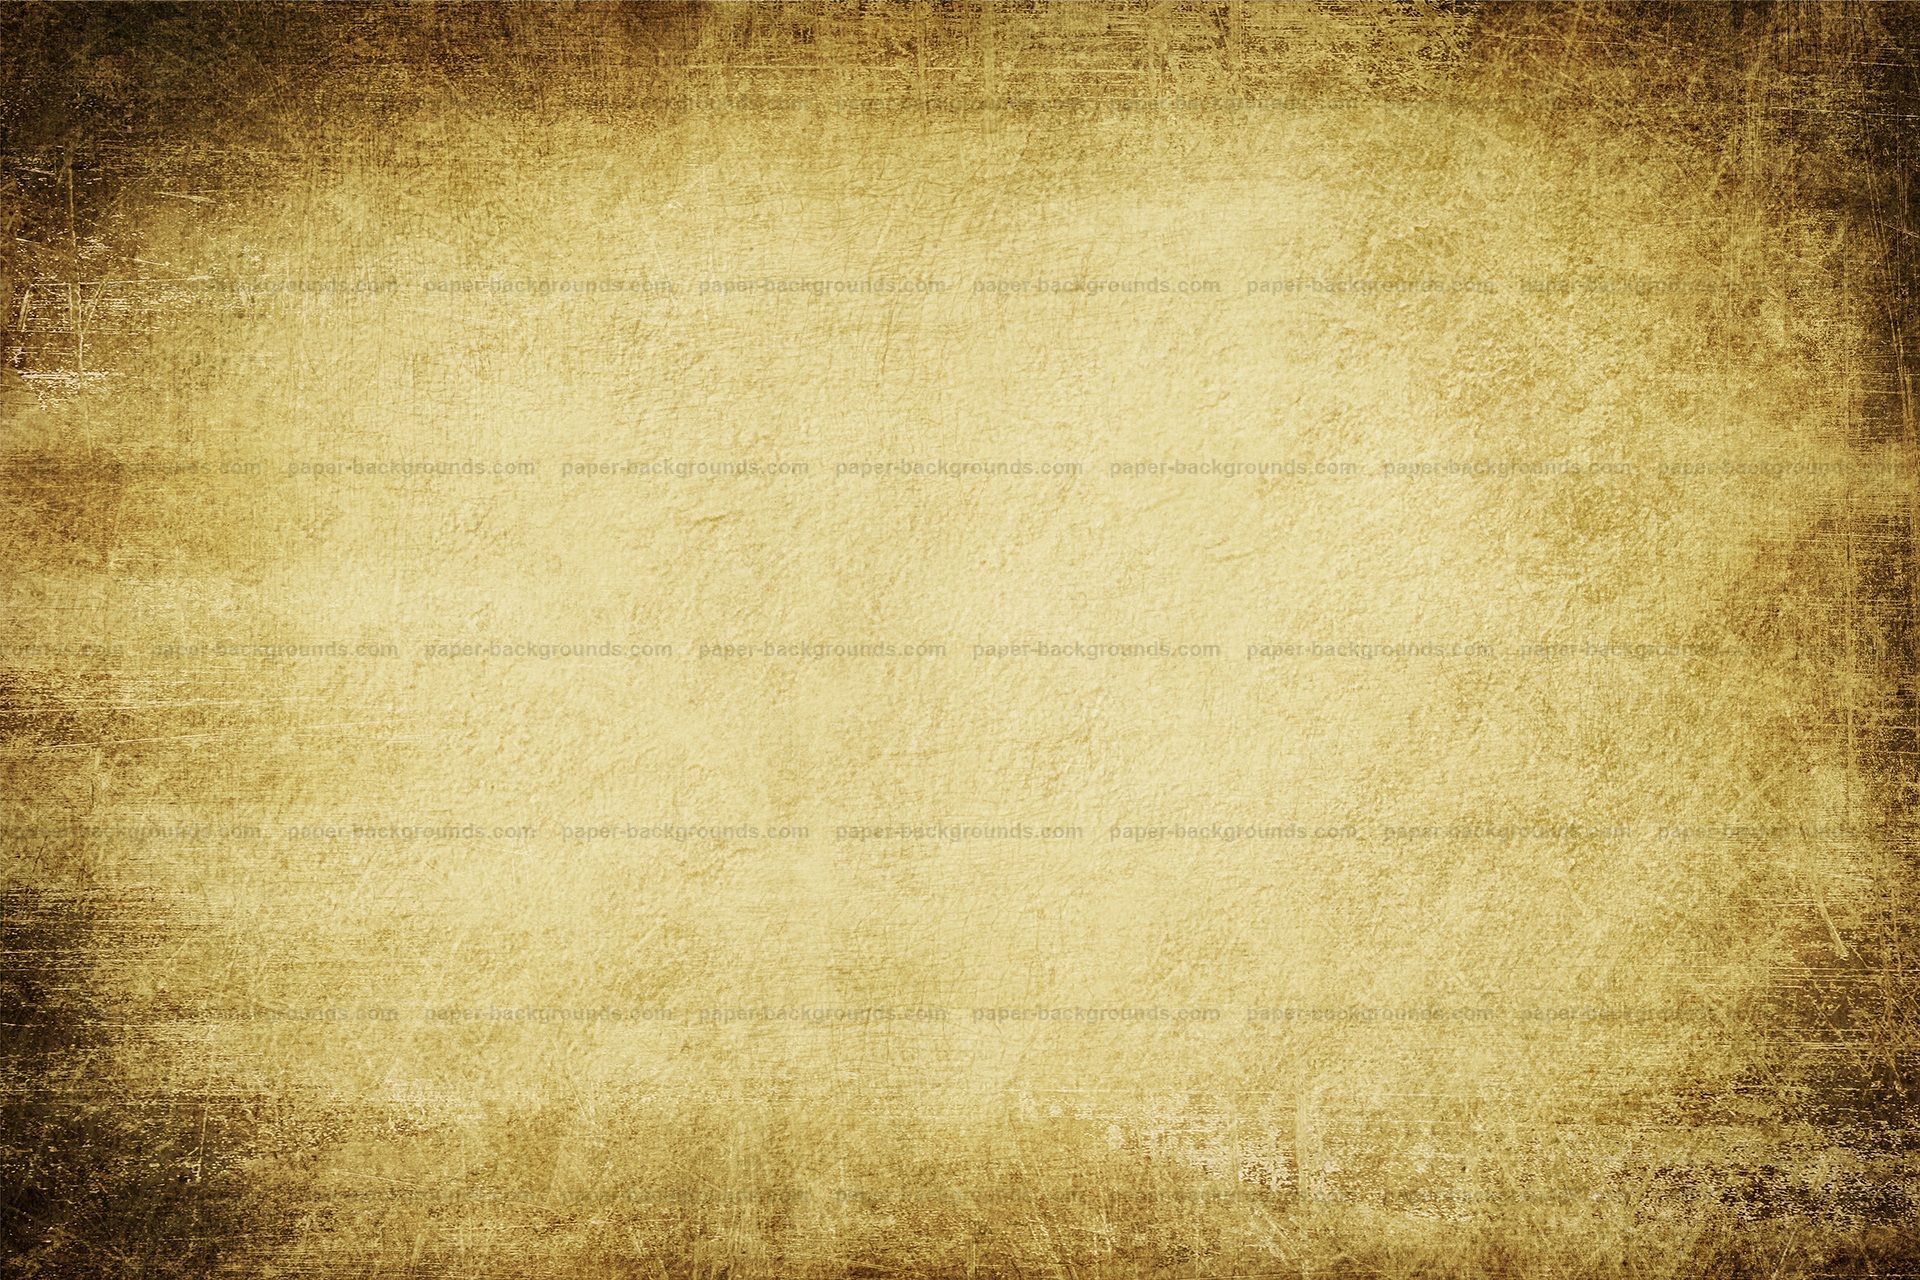 Yellow Grunge Wall Texture Background HD | Grunge | Pinterest | Wall ...